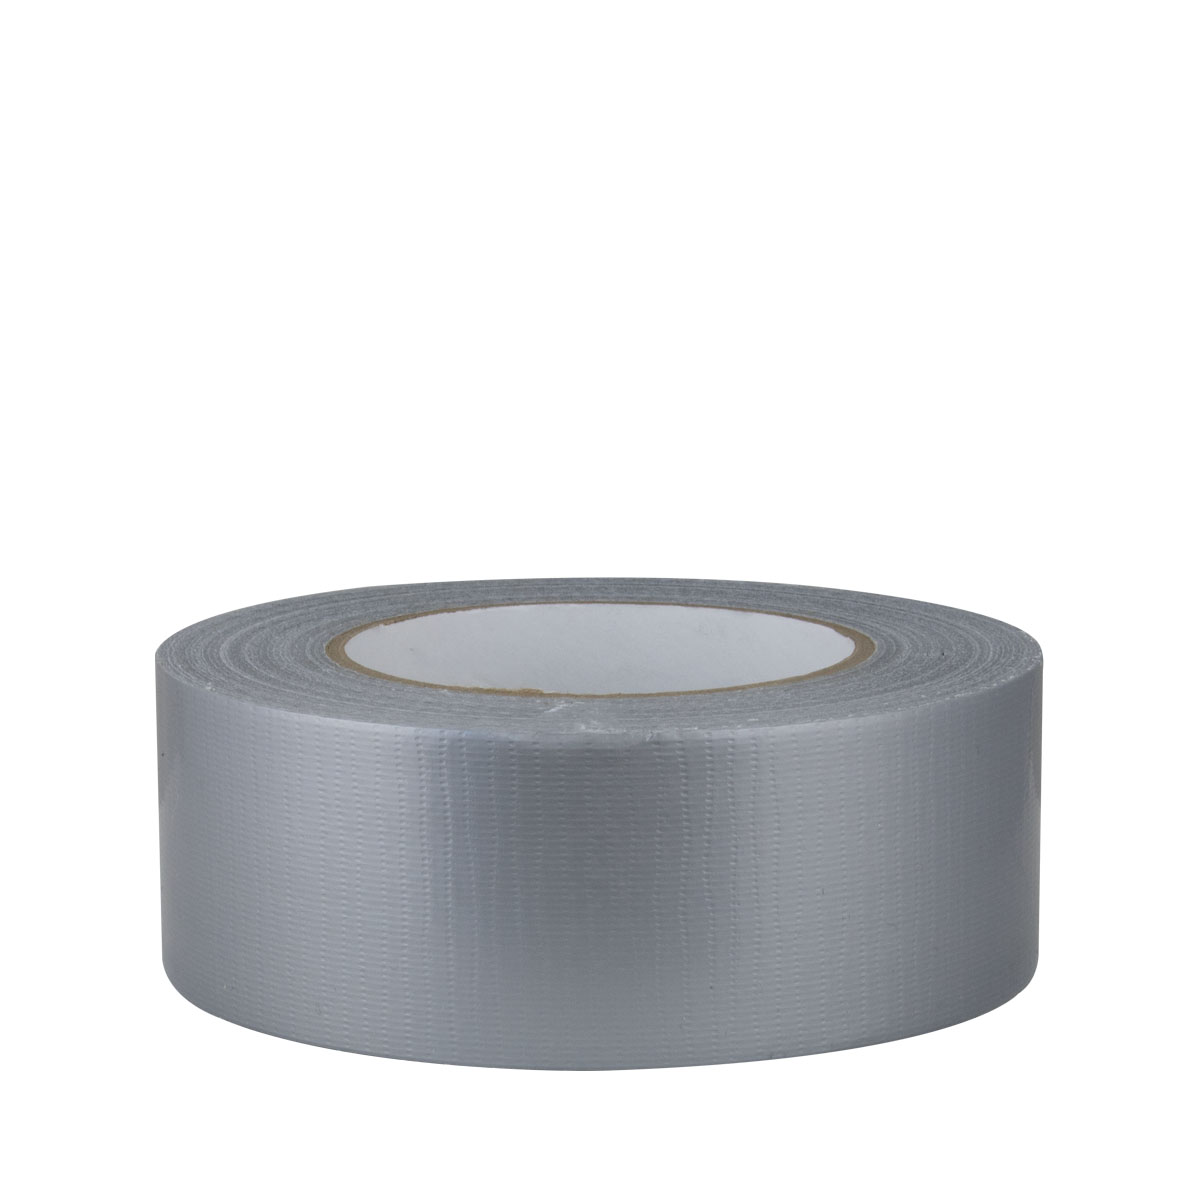 Farbklecks24 Gewebeband 48mm x 50m,silber Duct Tape, Reparaturband bis 40°C